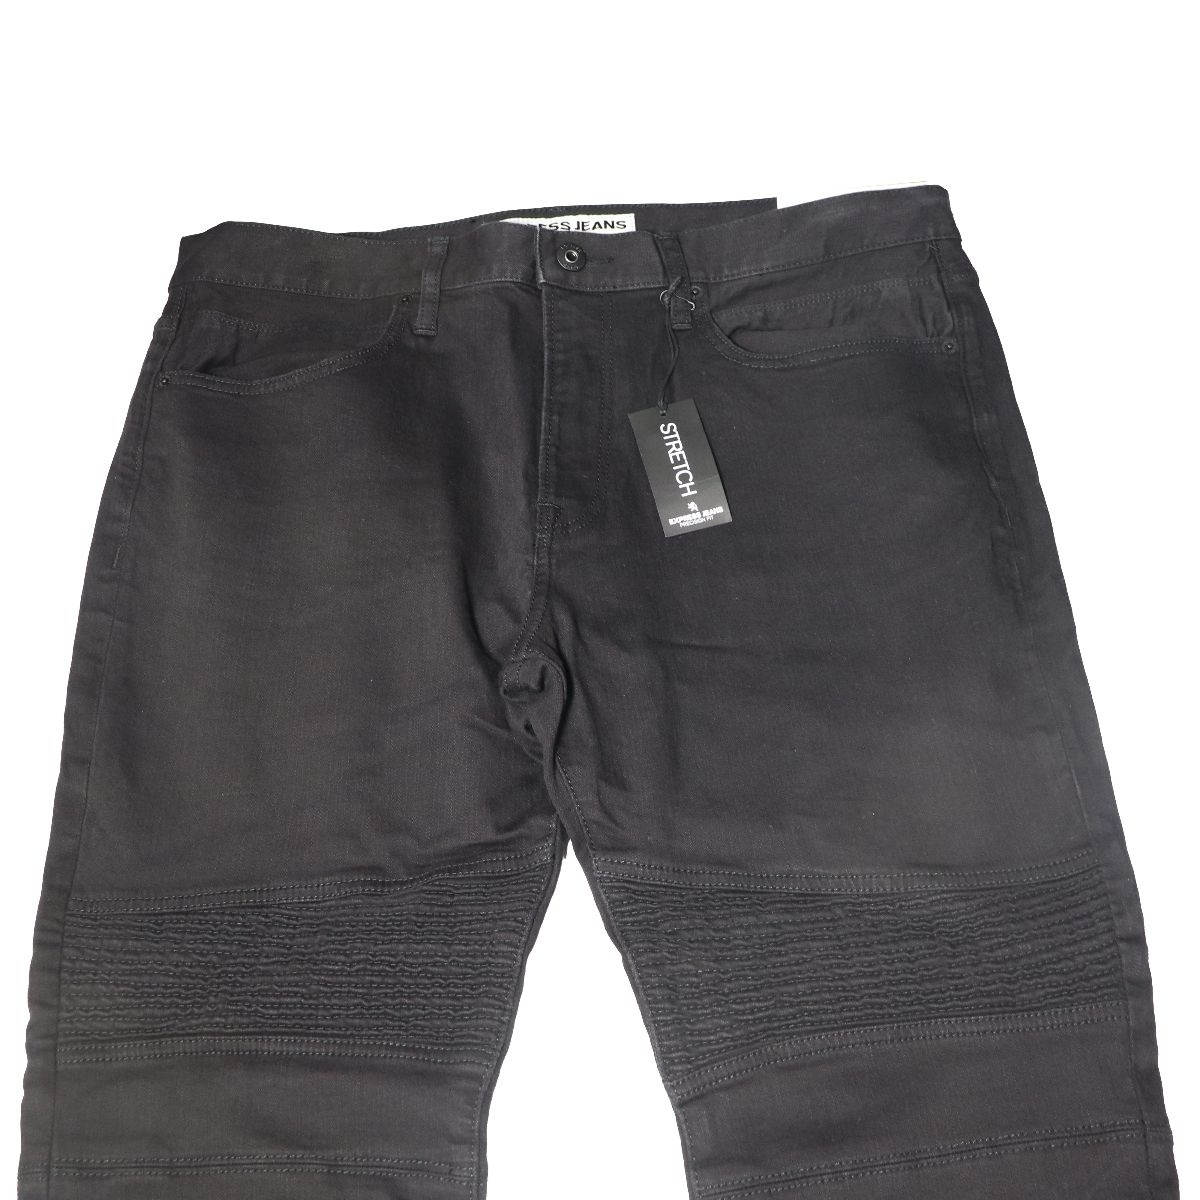 Express Jeans Mens Rocco Slim Fit Skinny Leg/Stretch - (W36 x L30) - Black/Ridge - image 1 of 2